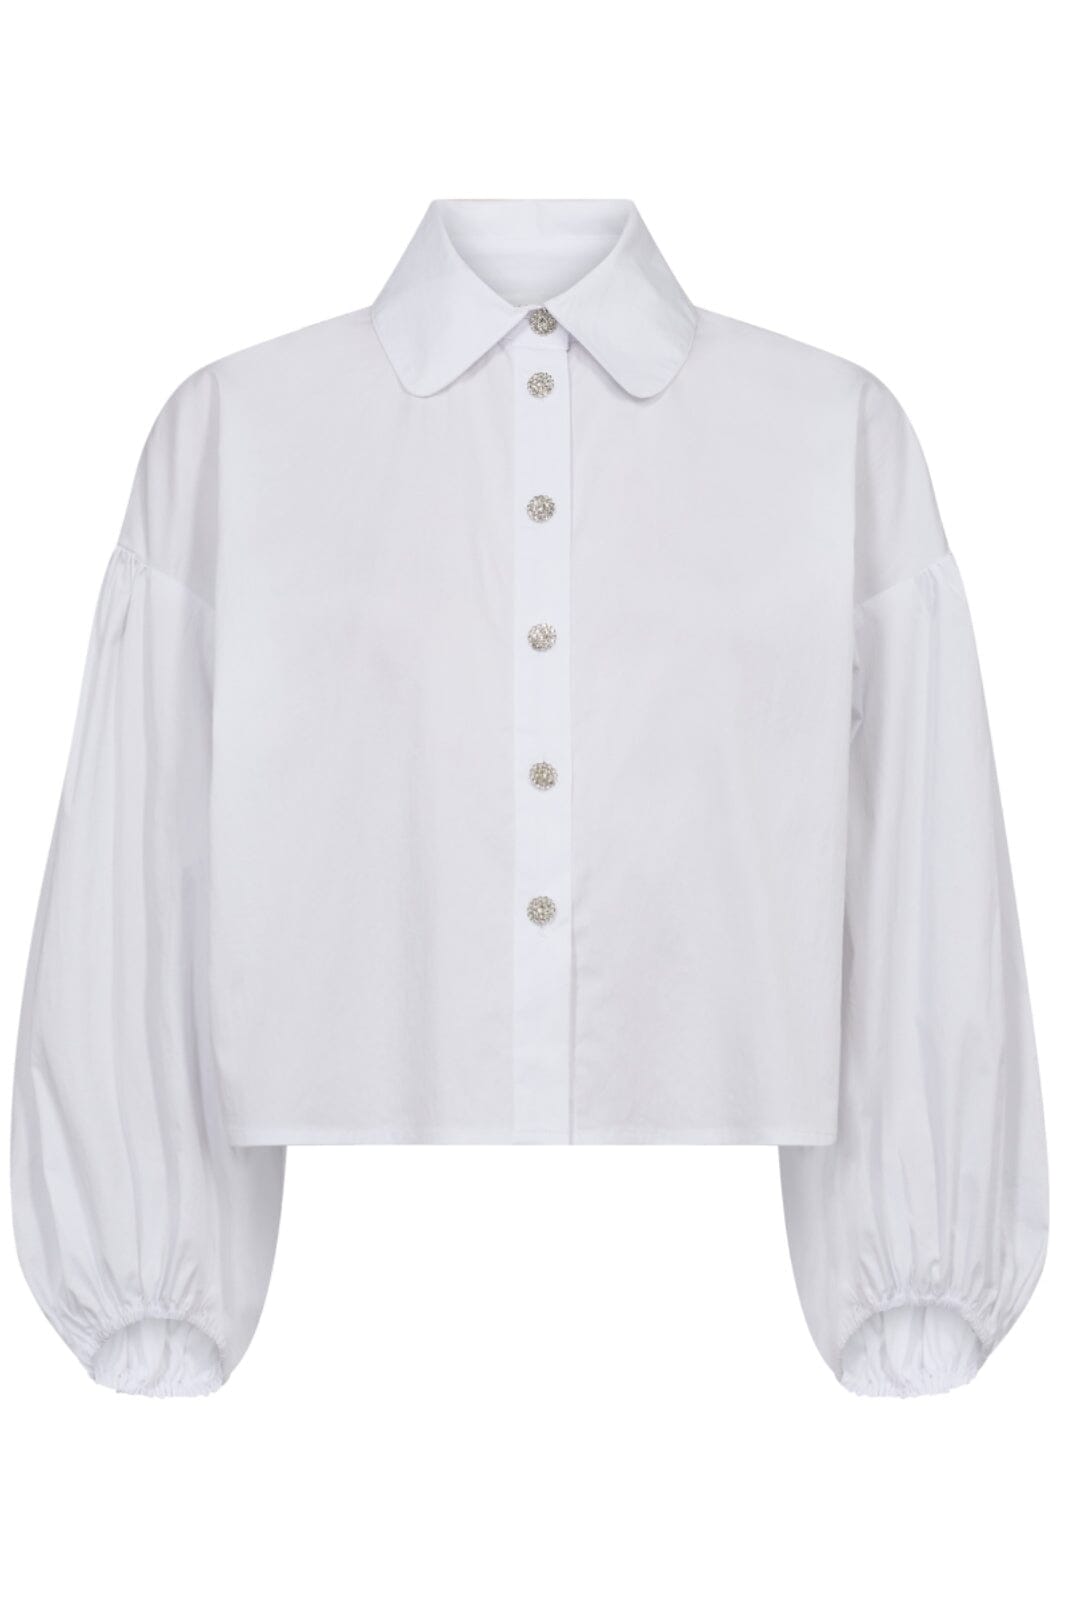 Co´couture - Cottoncc Crisp Crystal Shirt 35566 - 4000 White Skjorter 